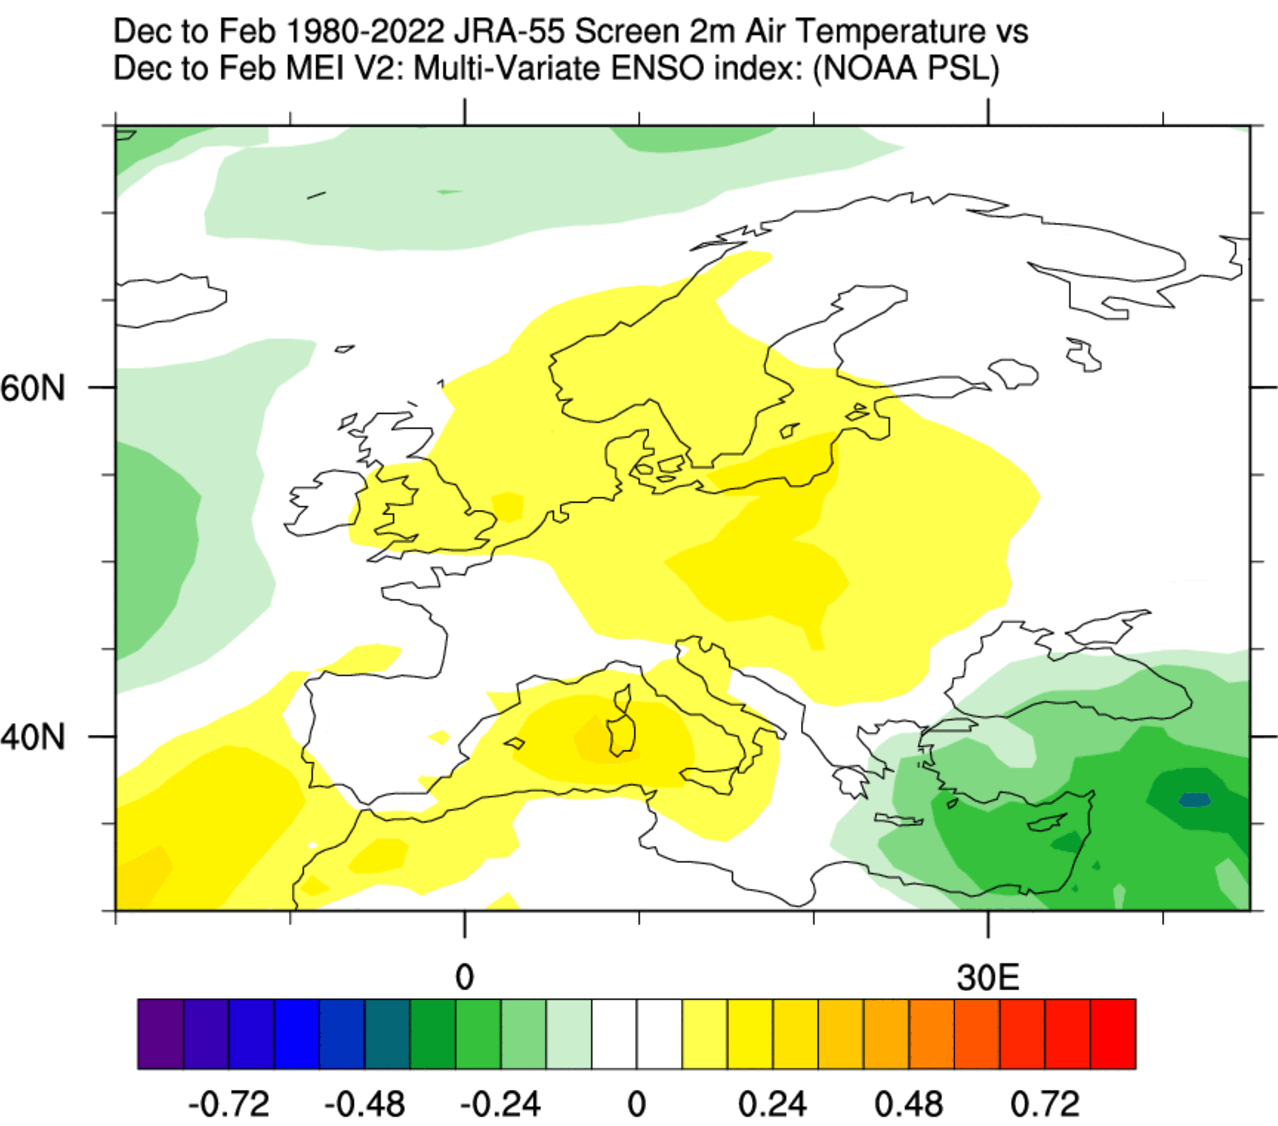 winter-weather-season-el-nino-watch-temperature-europe-influence-snow-pattern-forecast-historical-reanalysis-data